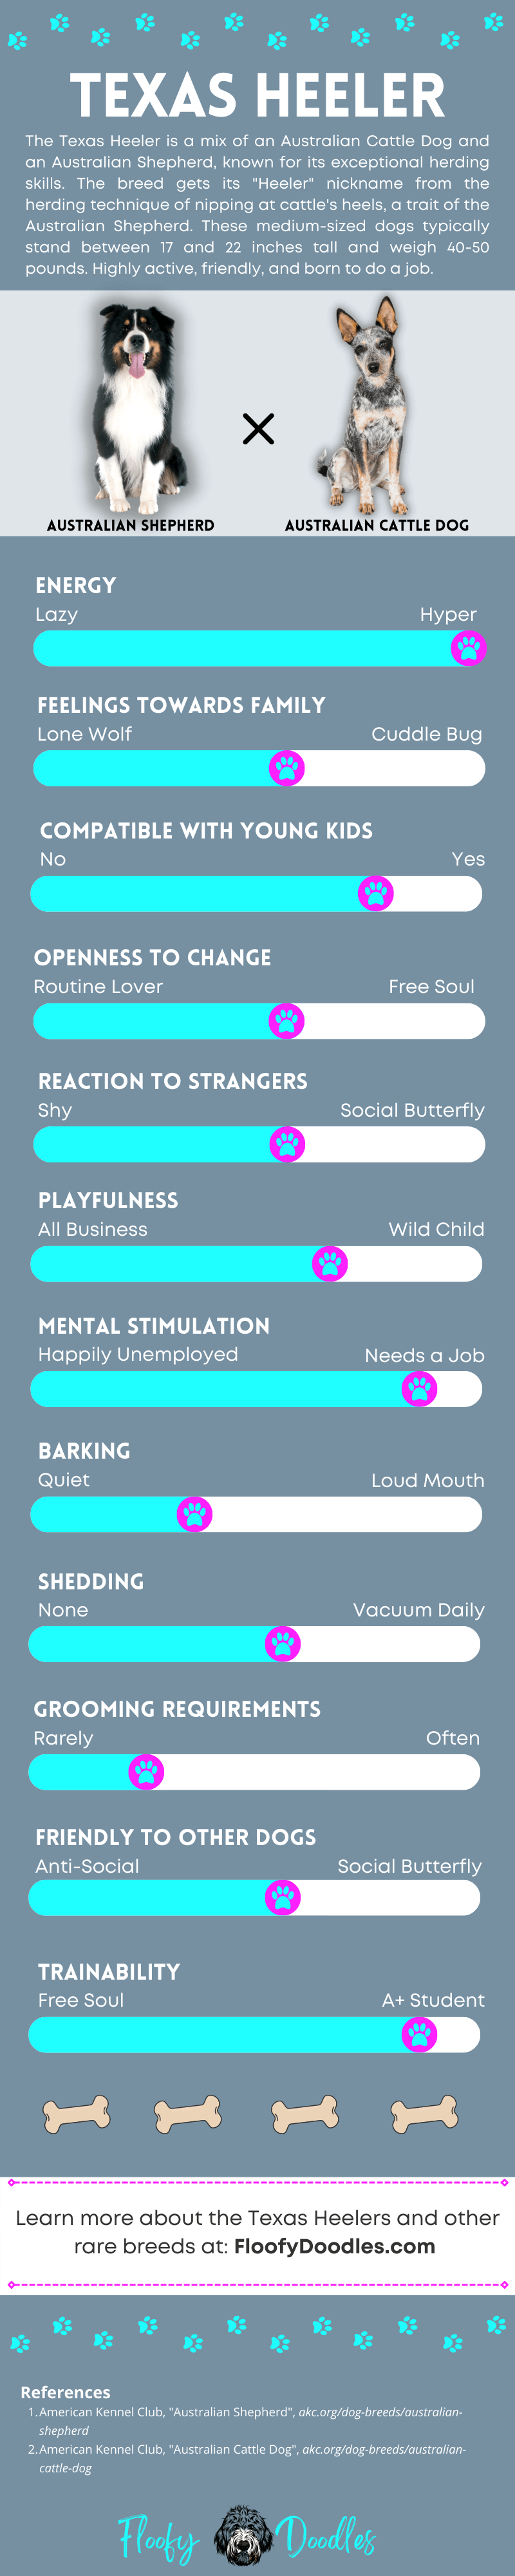 Infographic summarizing the traits and characteristics of the Texas Heeler.